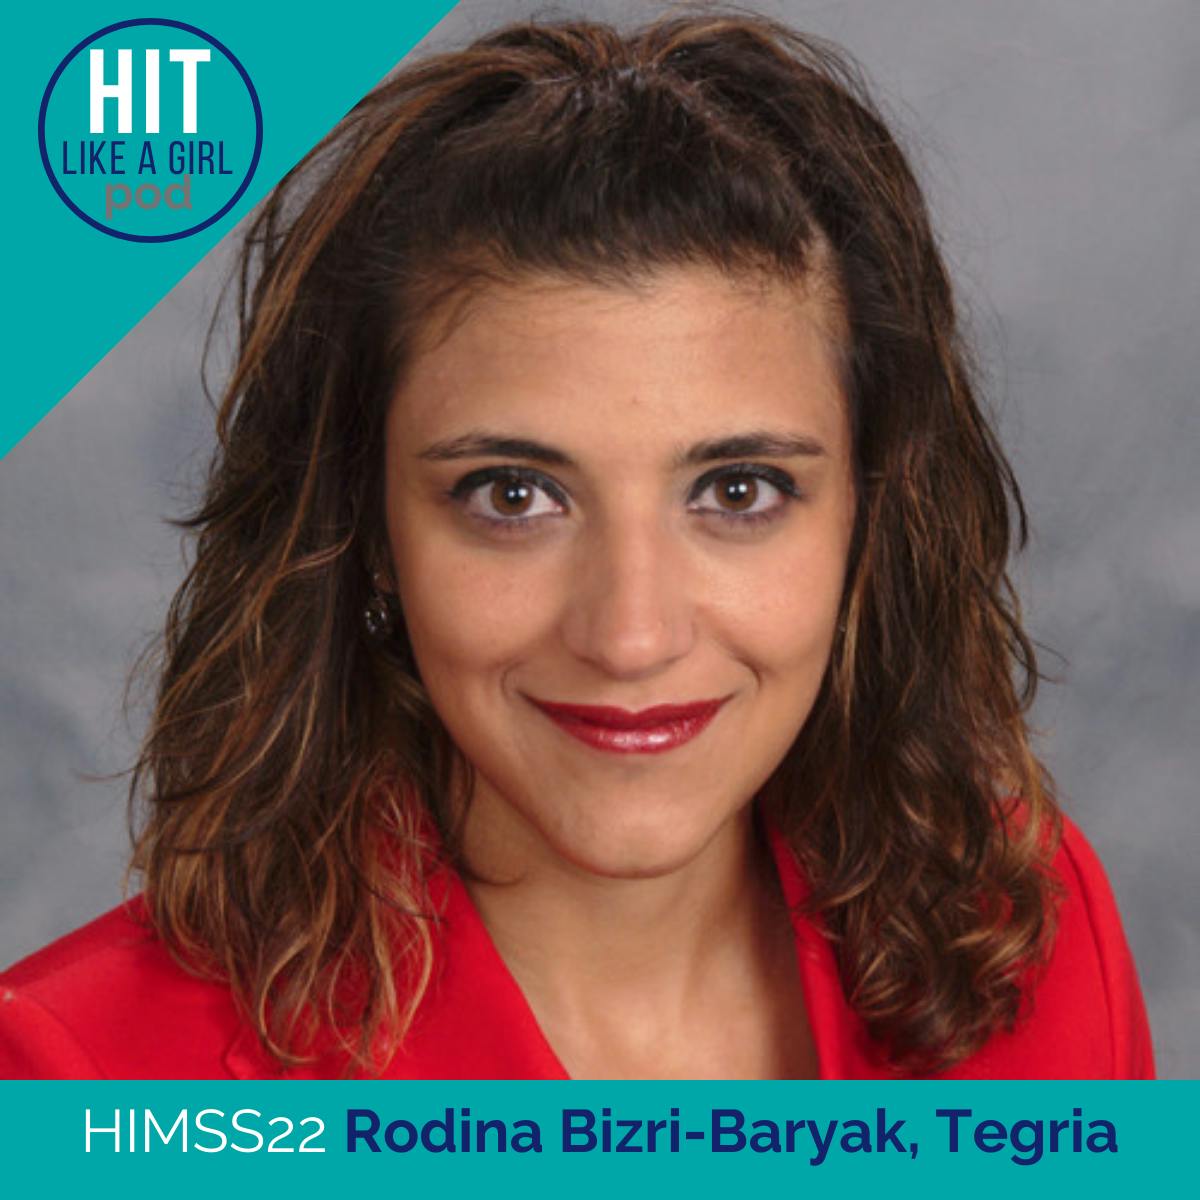 Rodina Bizri-Baryak Uses Her World Experience to Help Humanize Healthcare